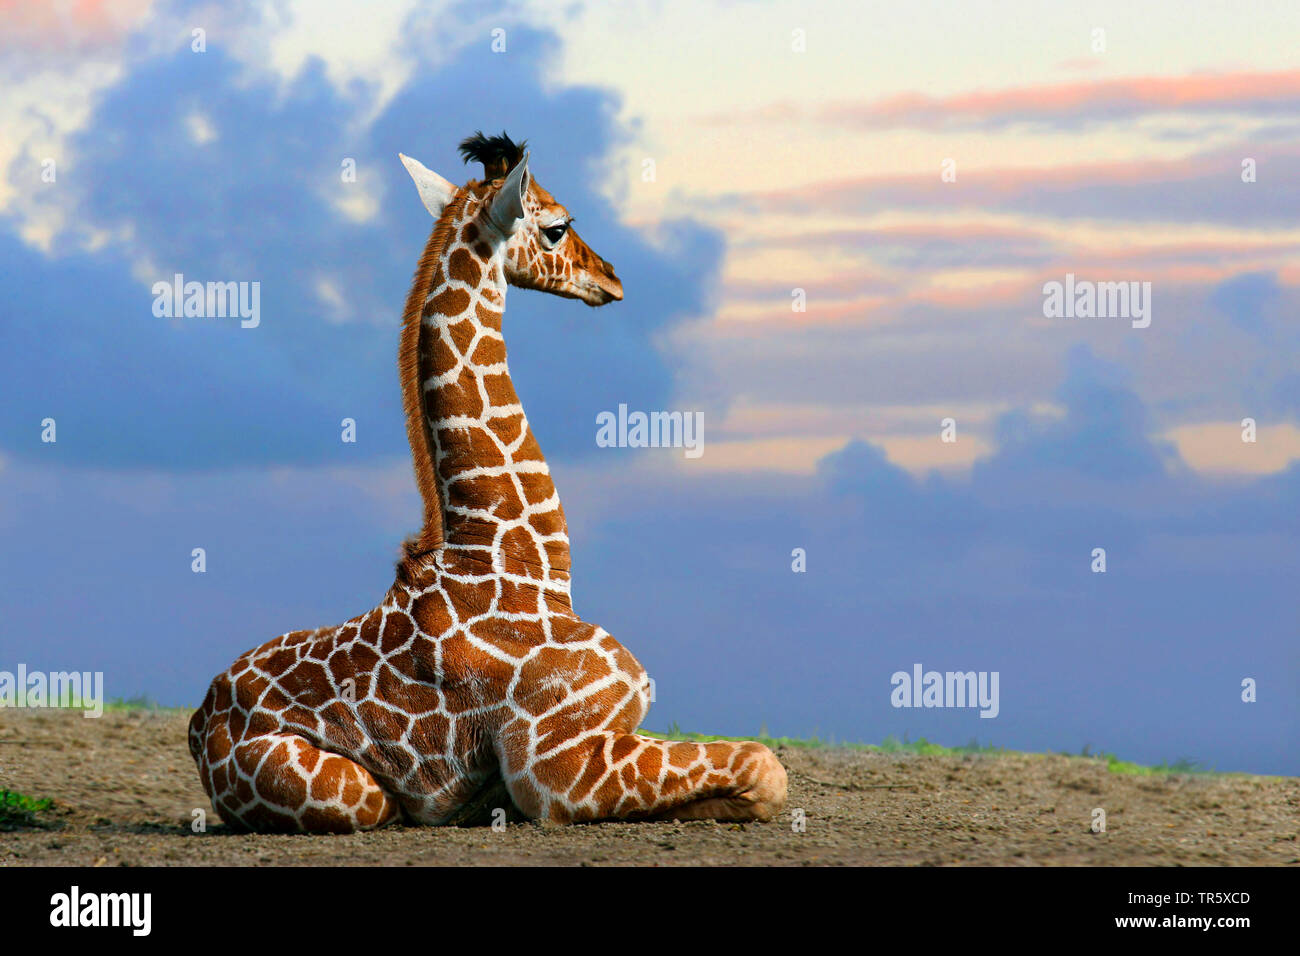 Jirafa (Giraffa camelopardalis), baby giraffe, sentados en el suelo y mirando curioso, vista lateral, África Foto de stock